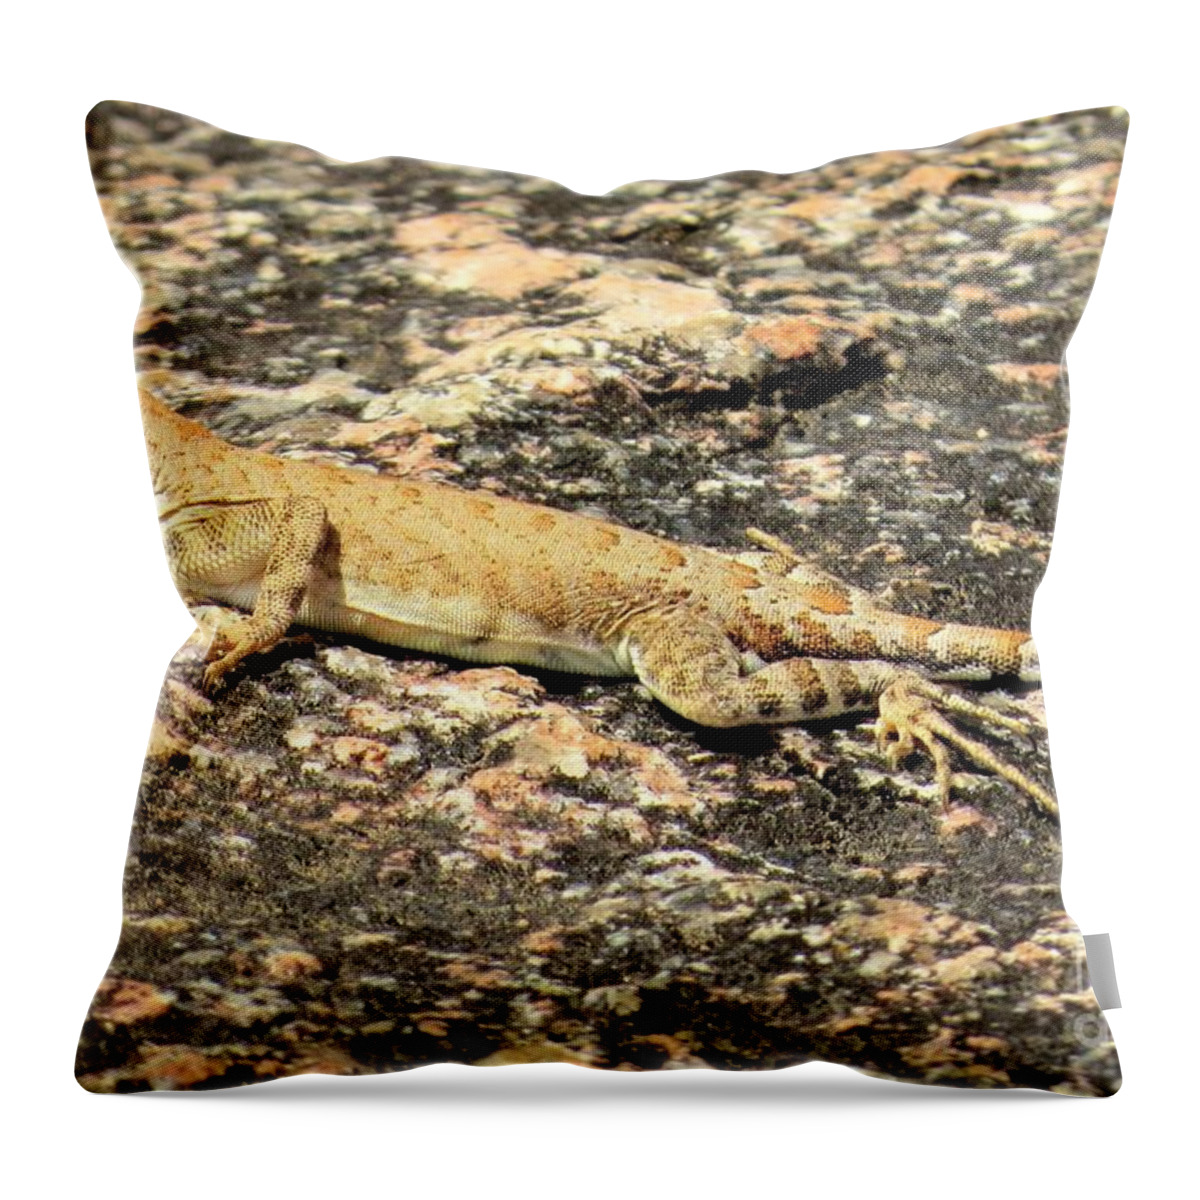 Lizard Throw Pillow featuring the photograph Anole lizard by Frank Townsley